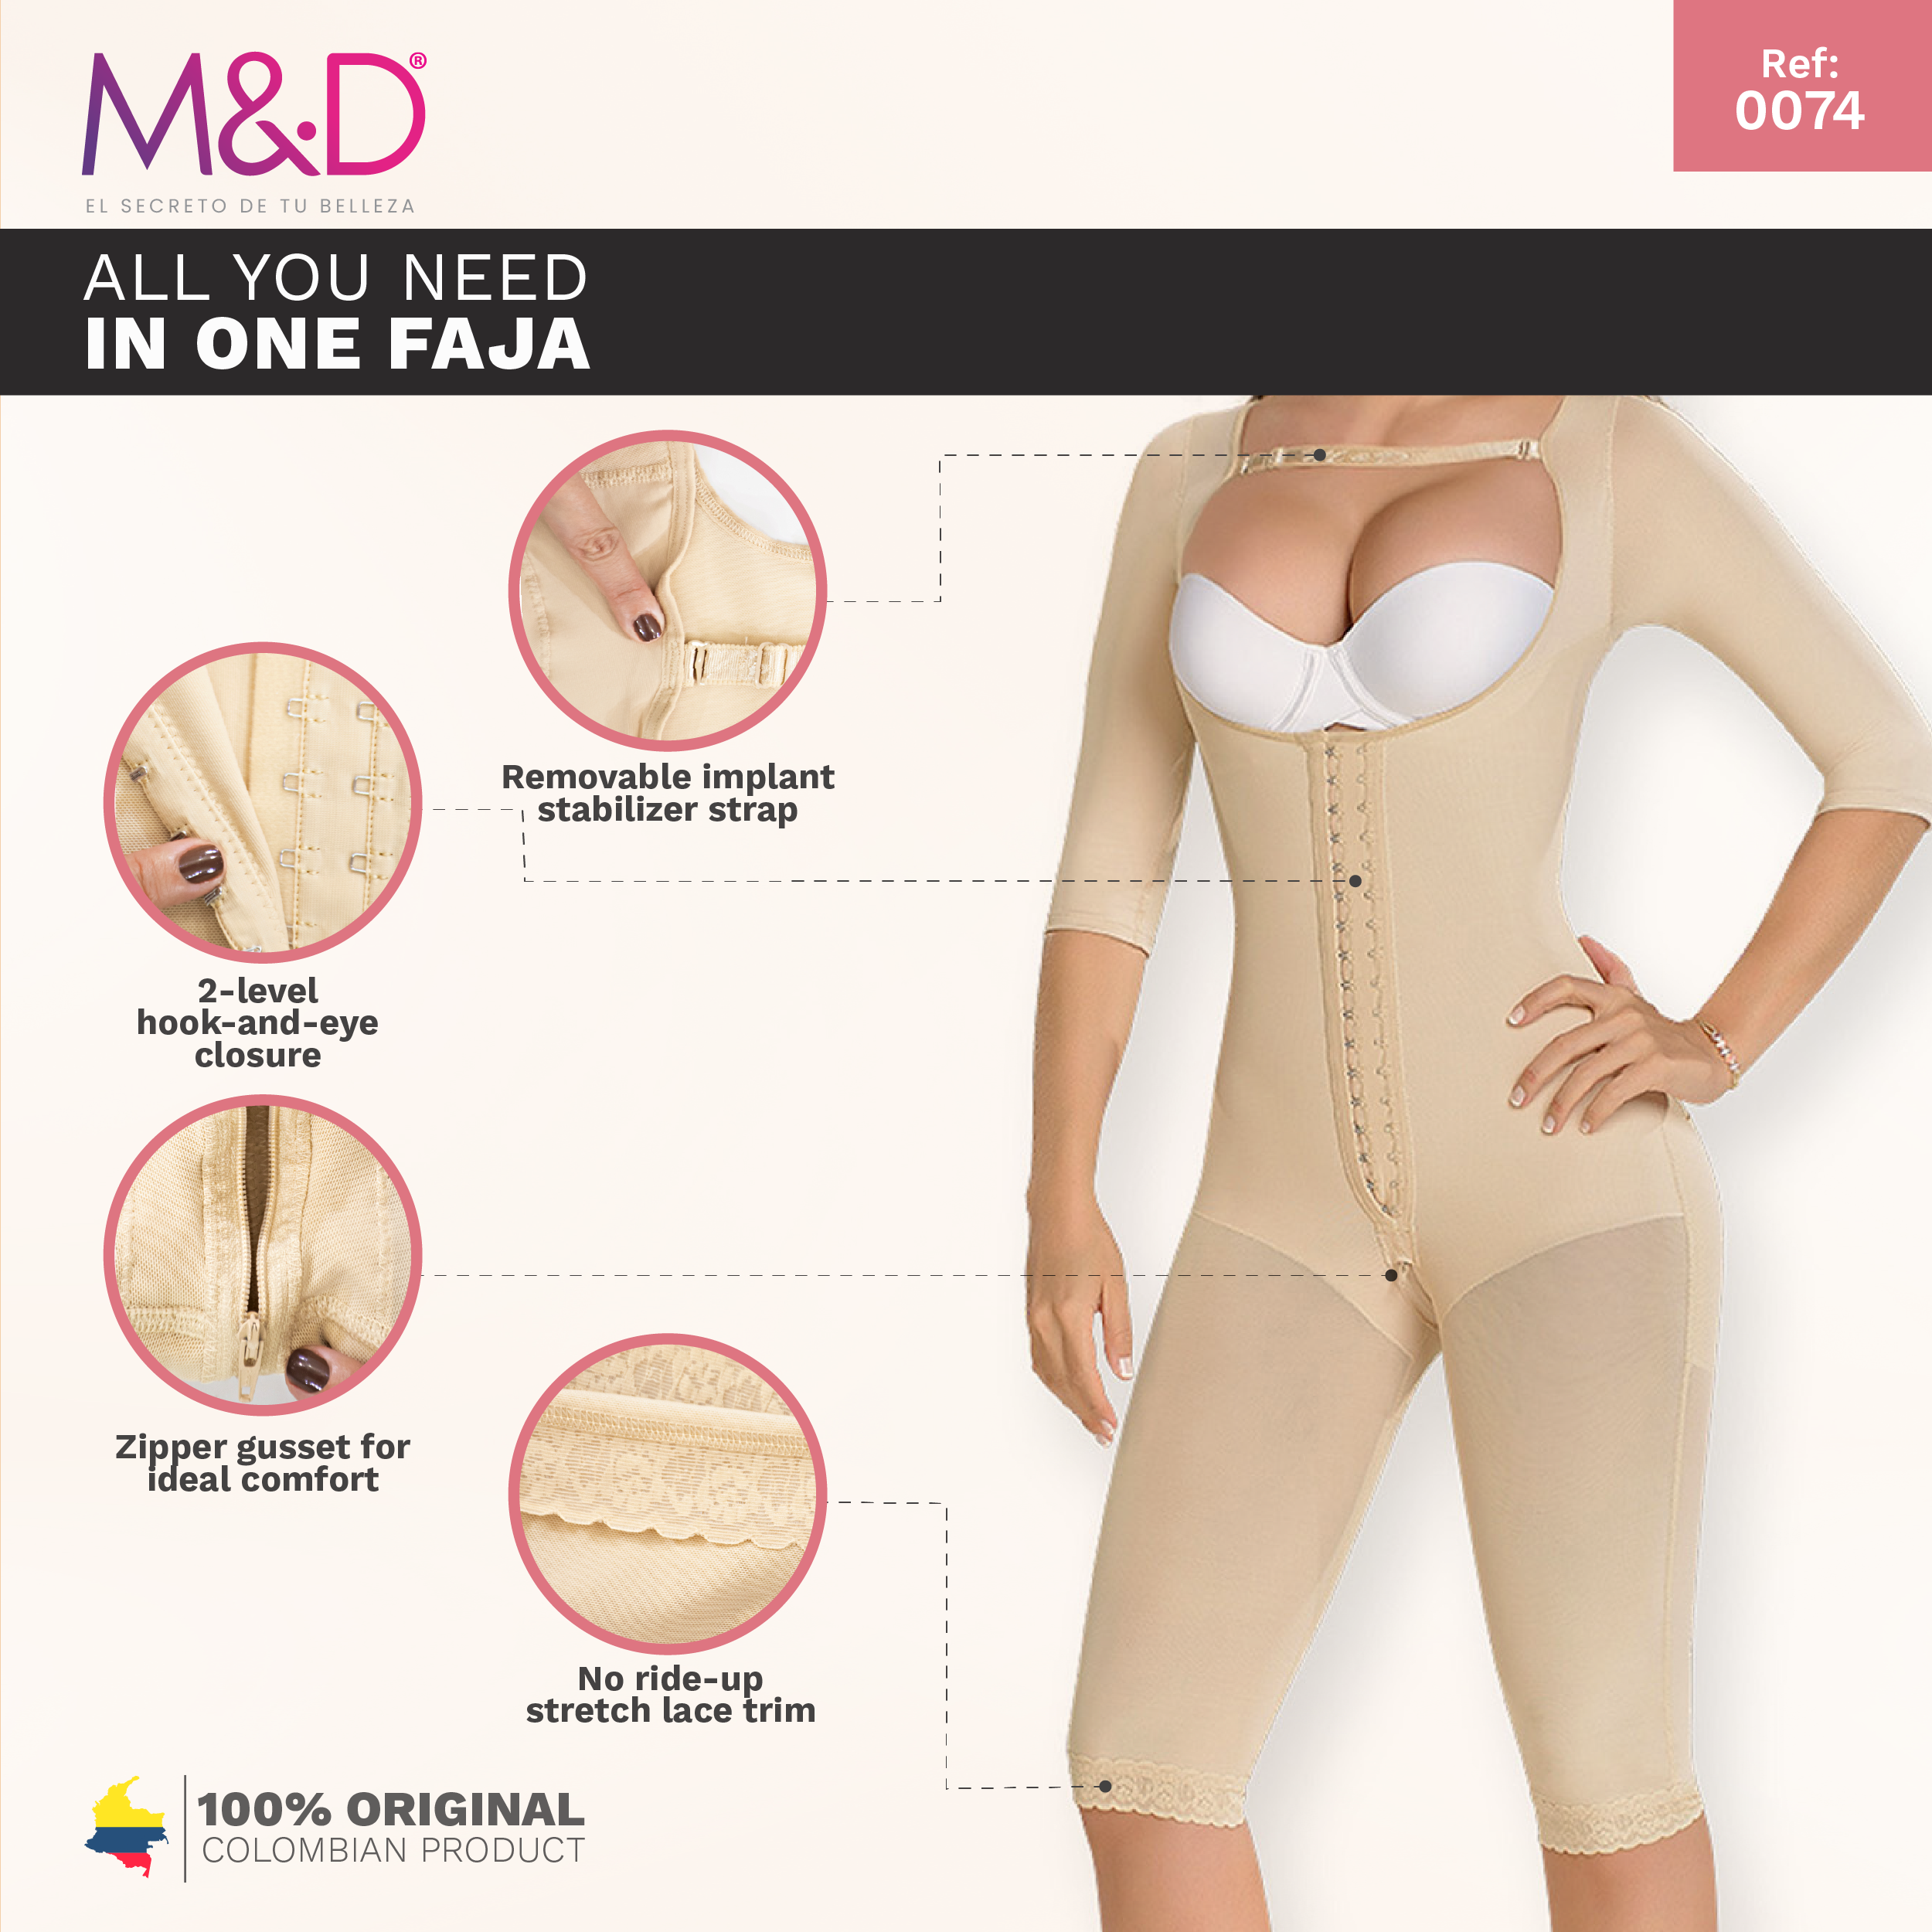 Post-Surgical Faja M&D Knee-Length Straps